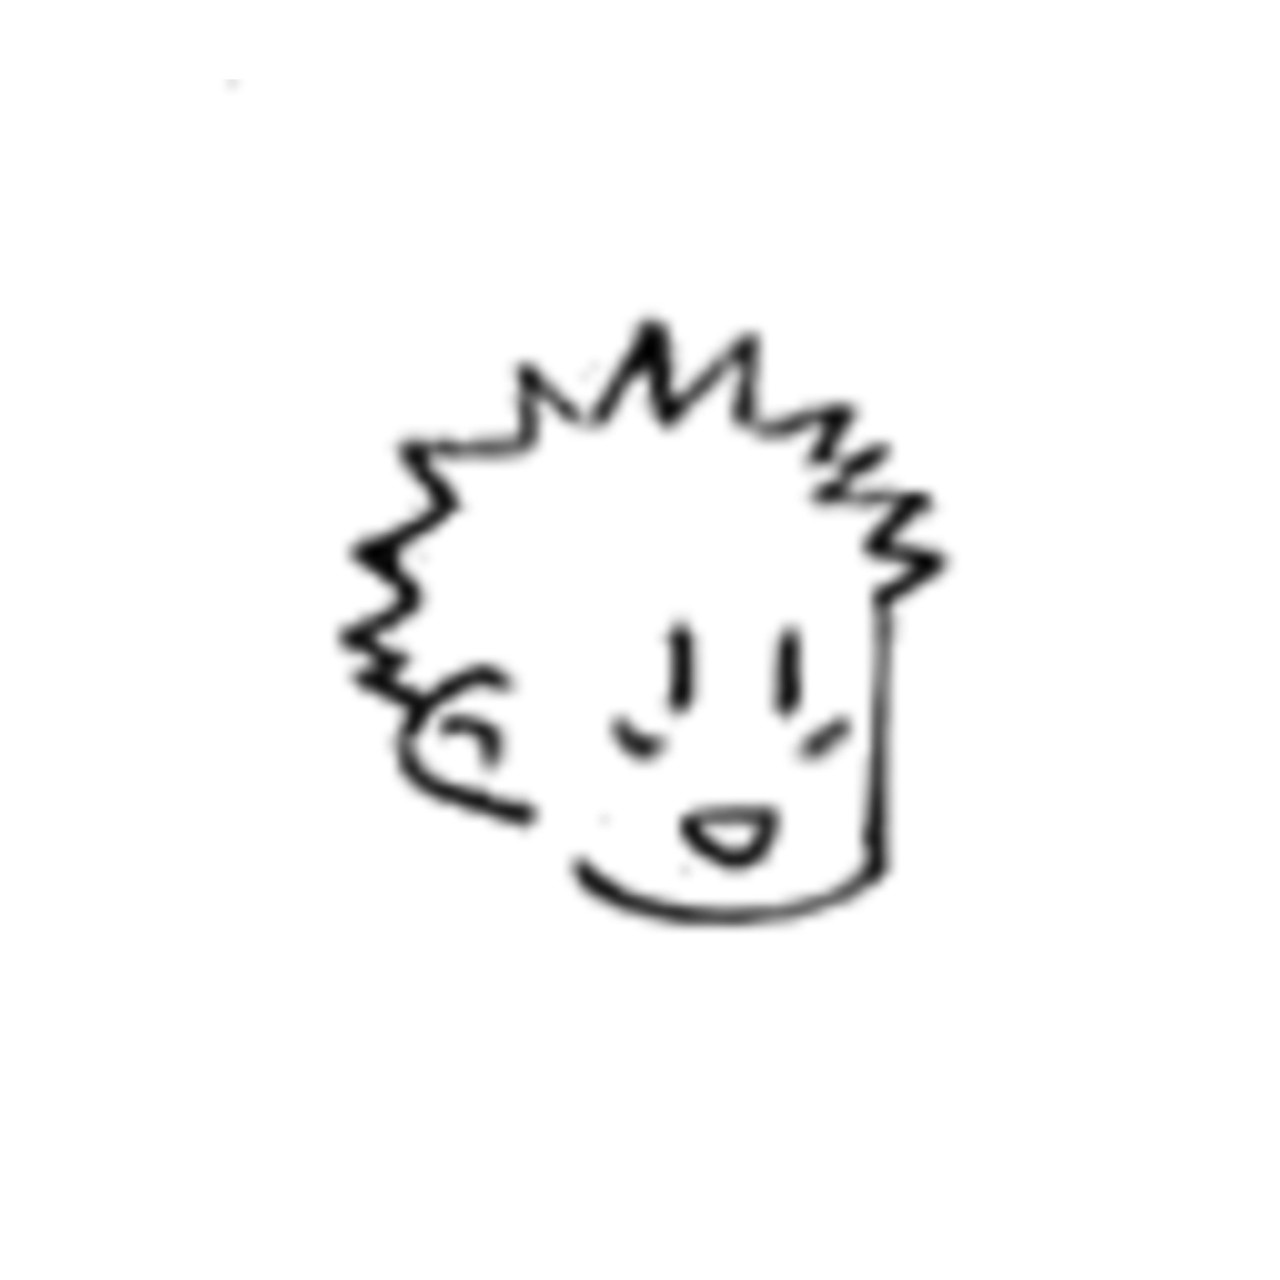 mangaterial — bachira meguru・manga icons pls like if you save